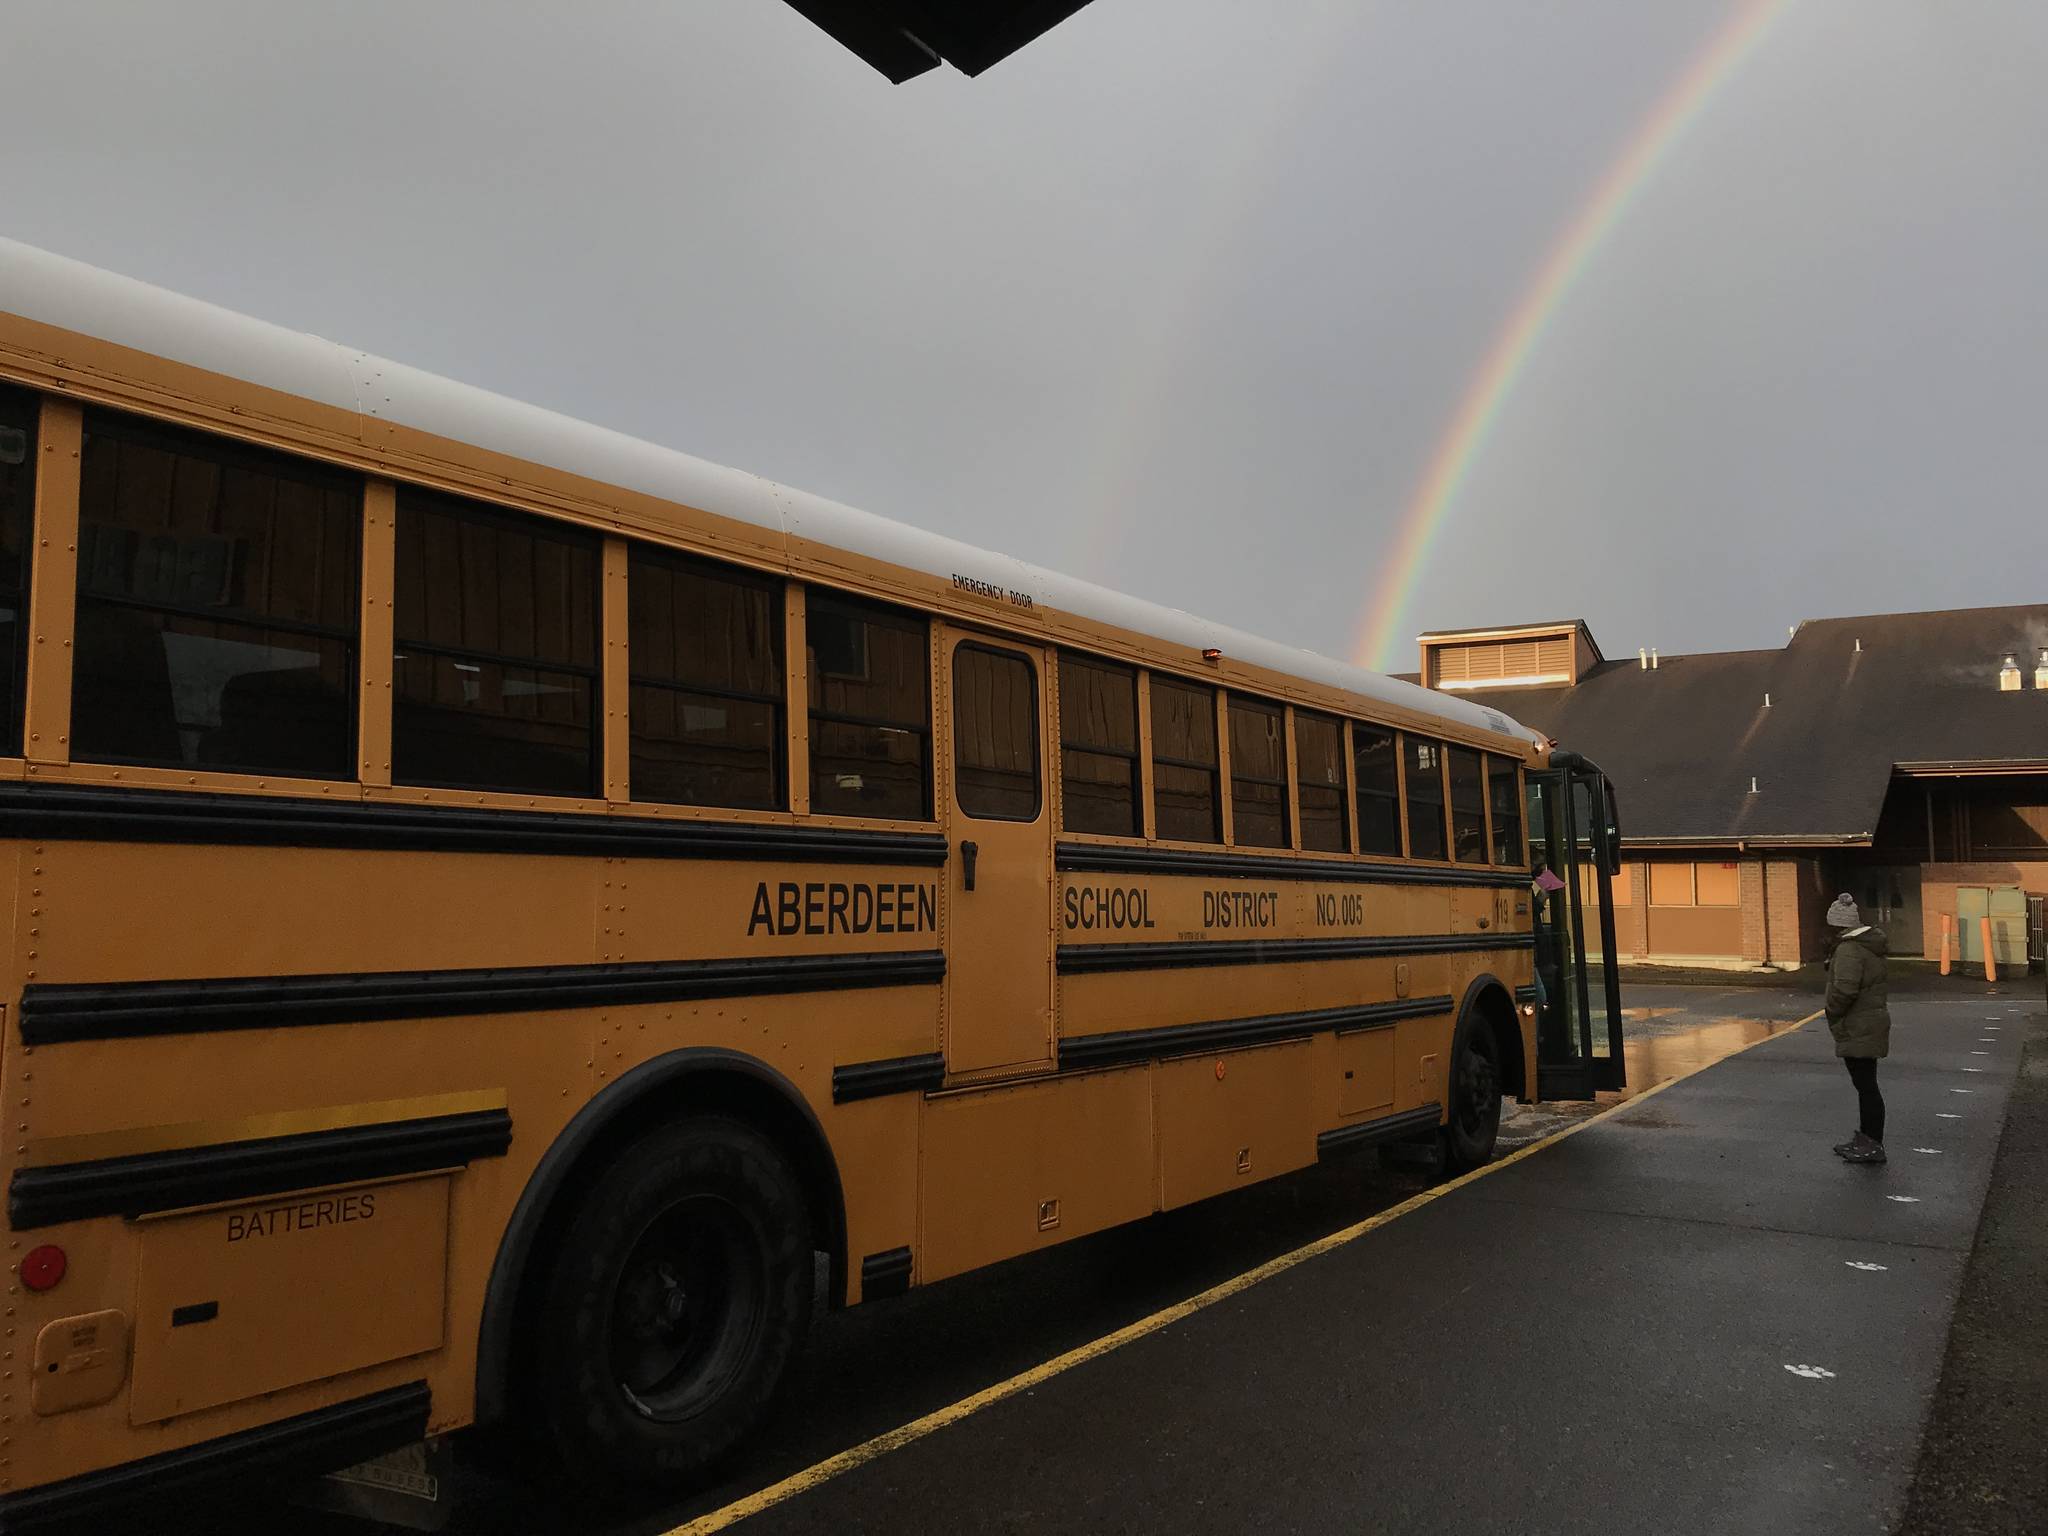 Miller Junior High photo 
A Miller Junior High student awaits the bus under a double-rainbow.